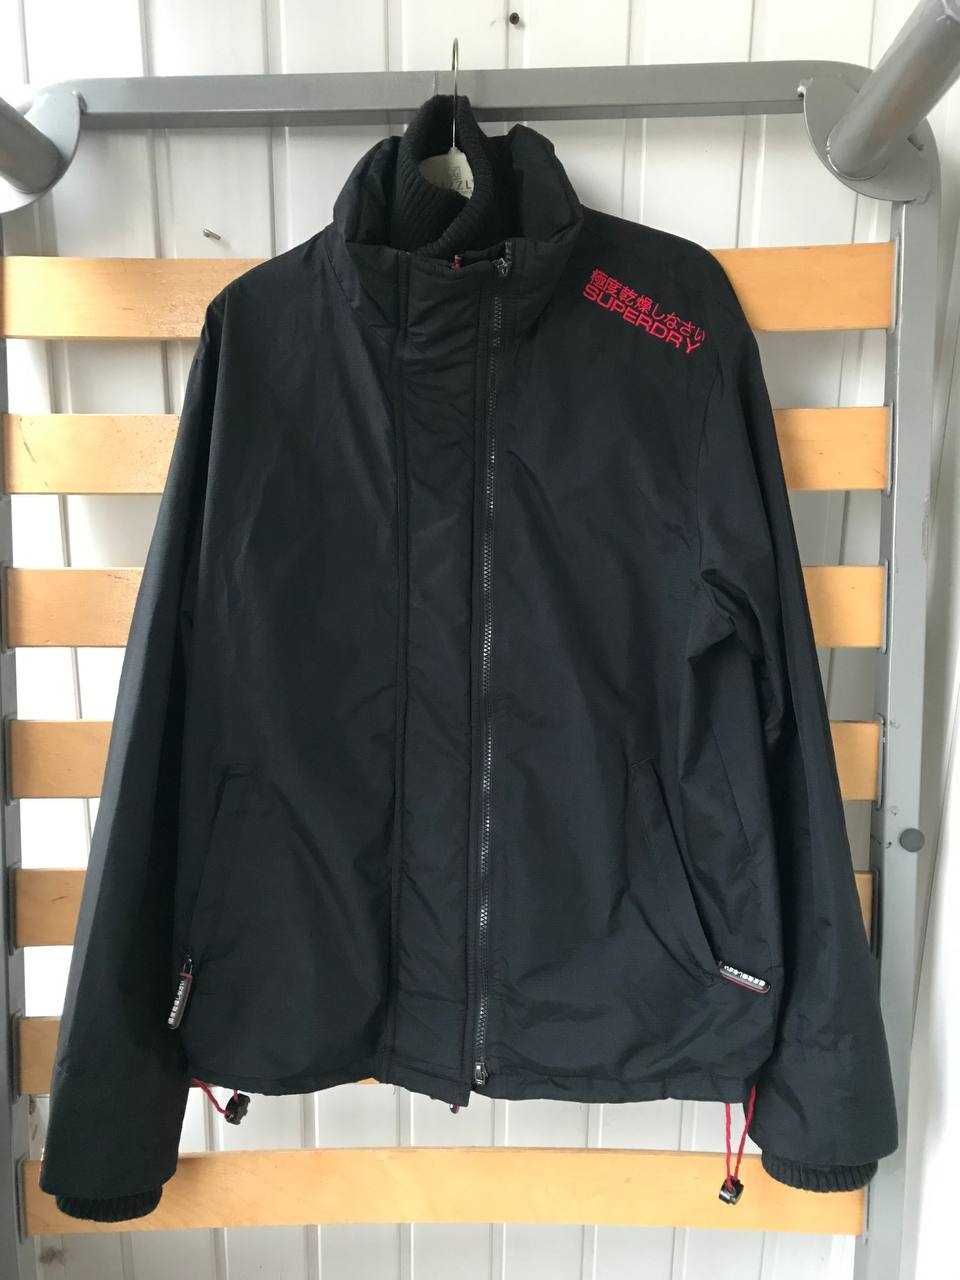 Размер М. Ветровка куртка курточка superdry Japan